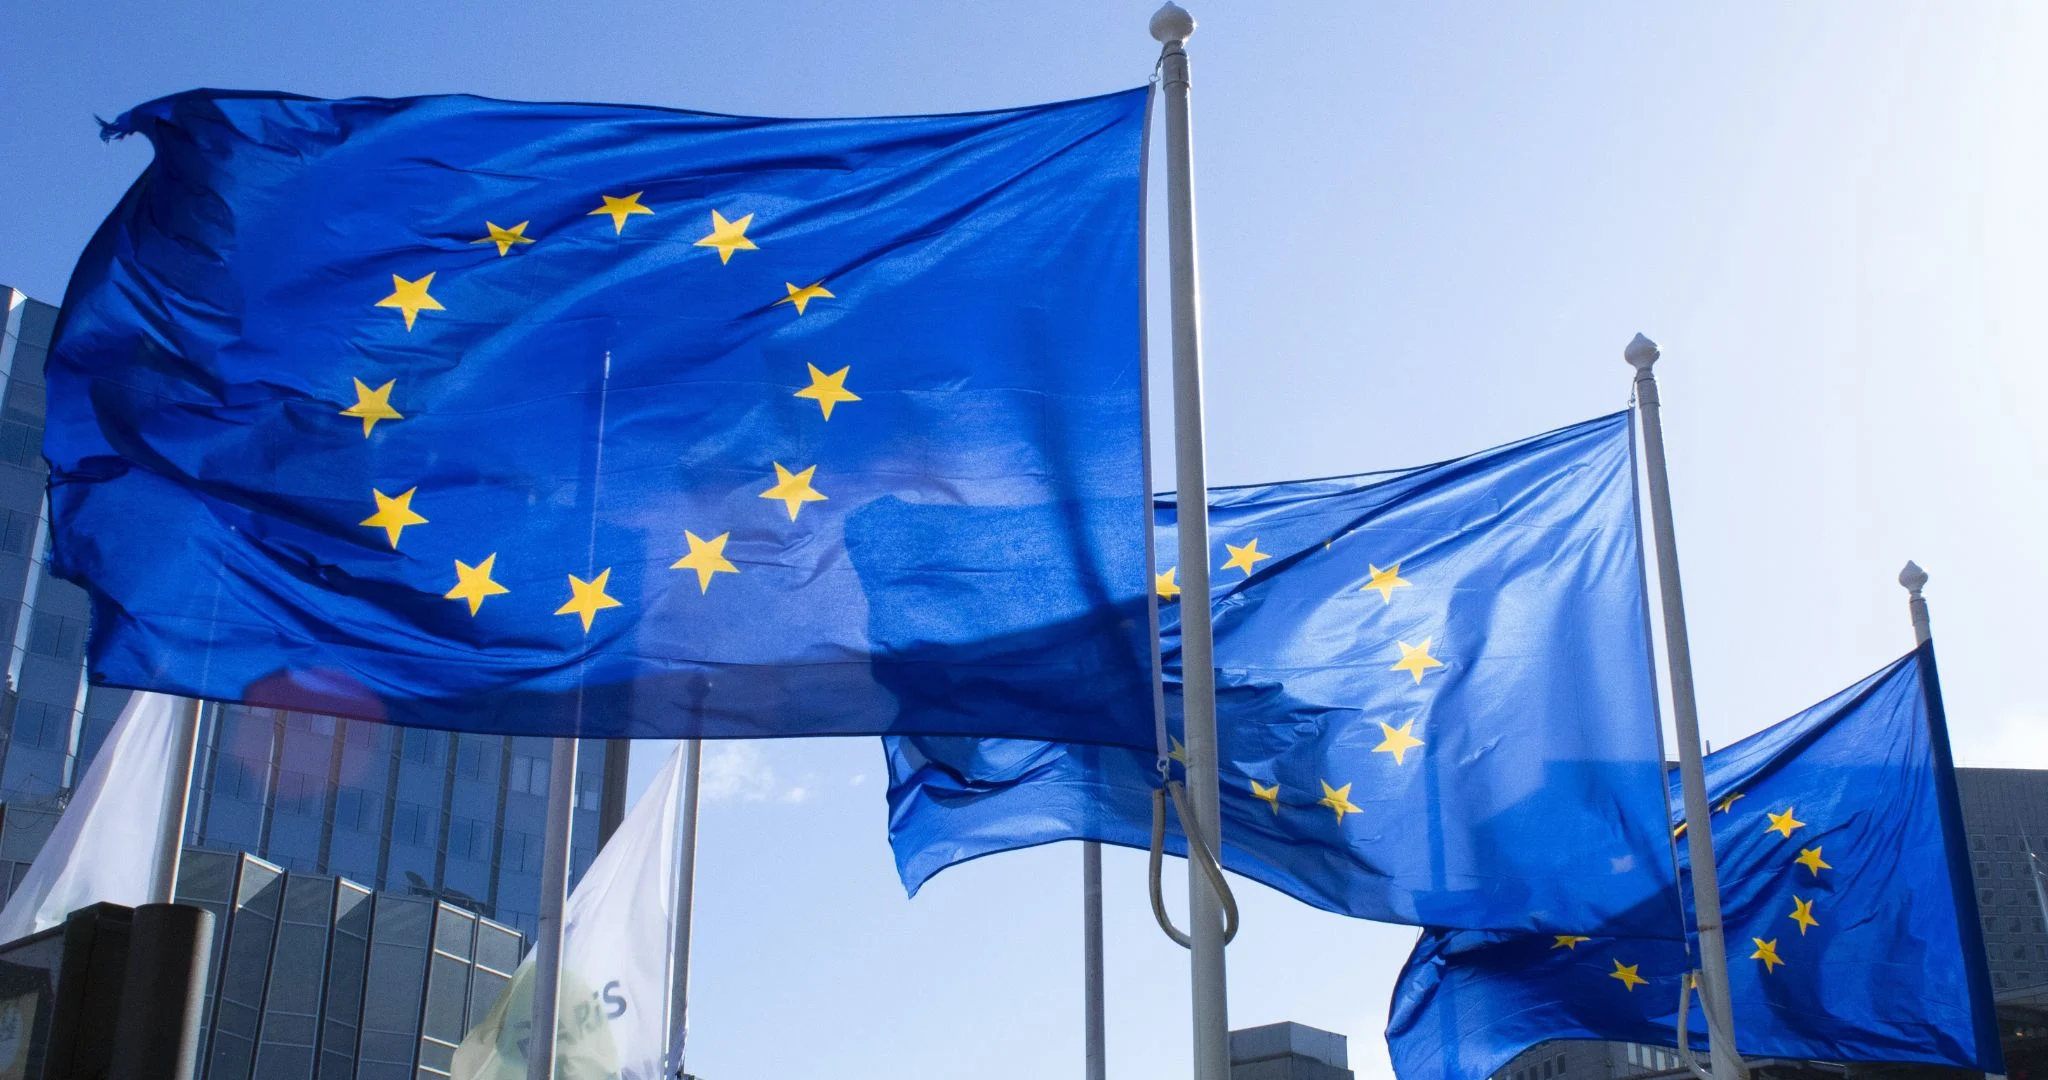 EU flags fluttering in the wind. Source: ALEXANDRE LALLEMAND / Unsplash